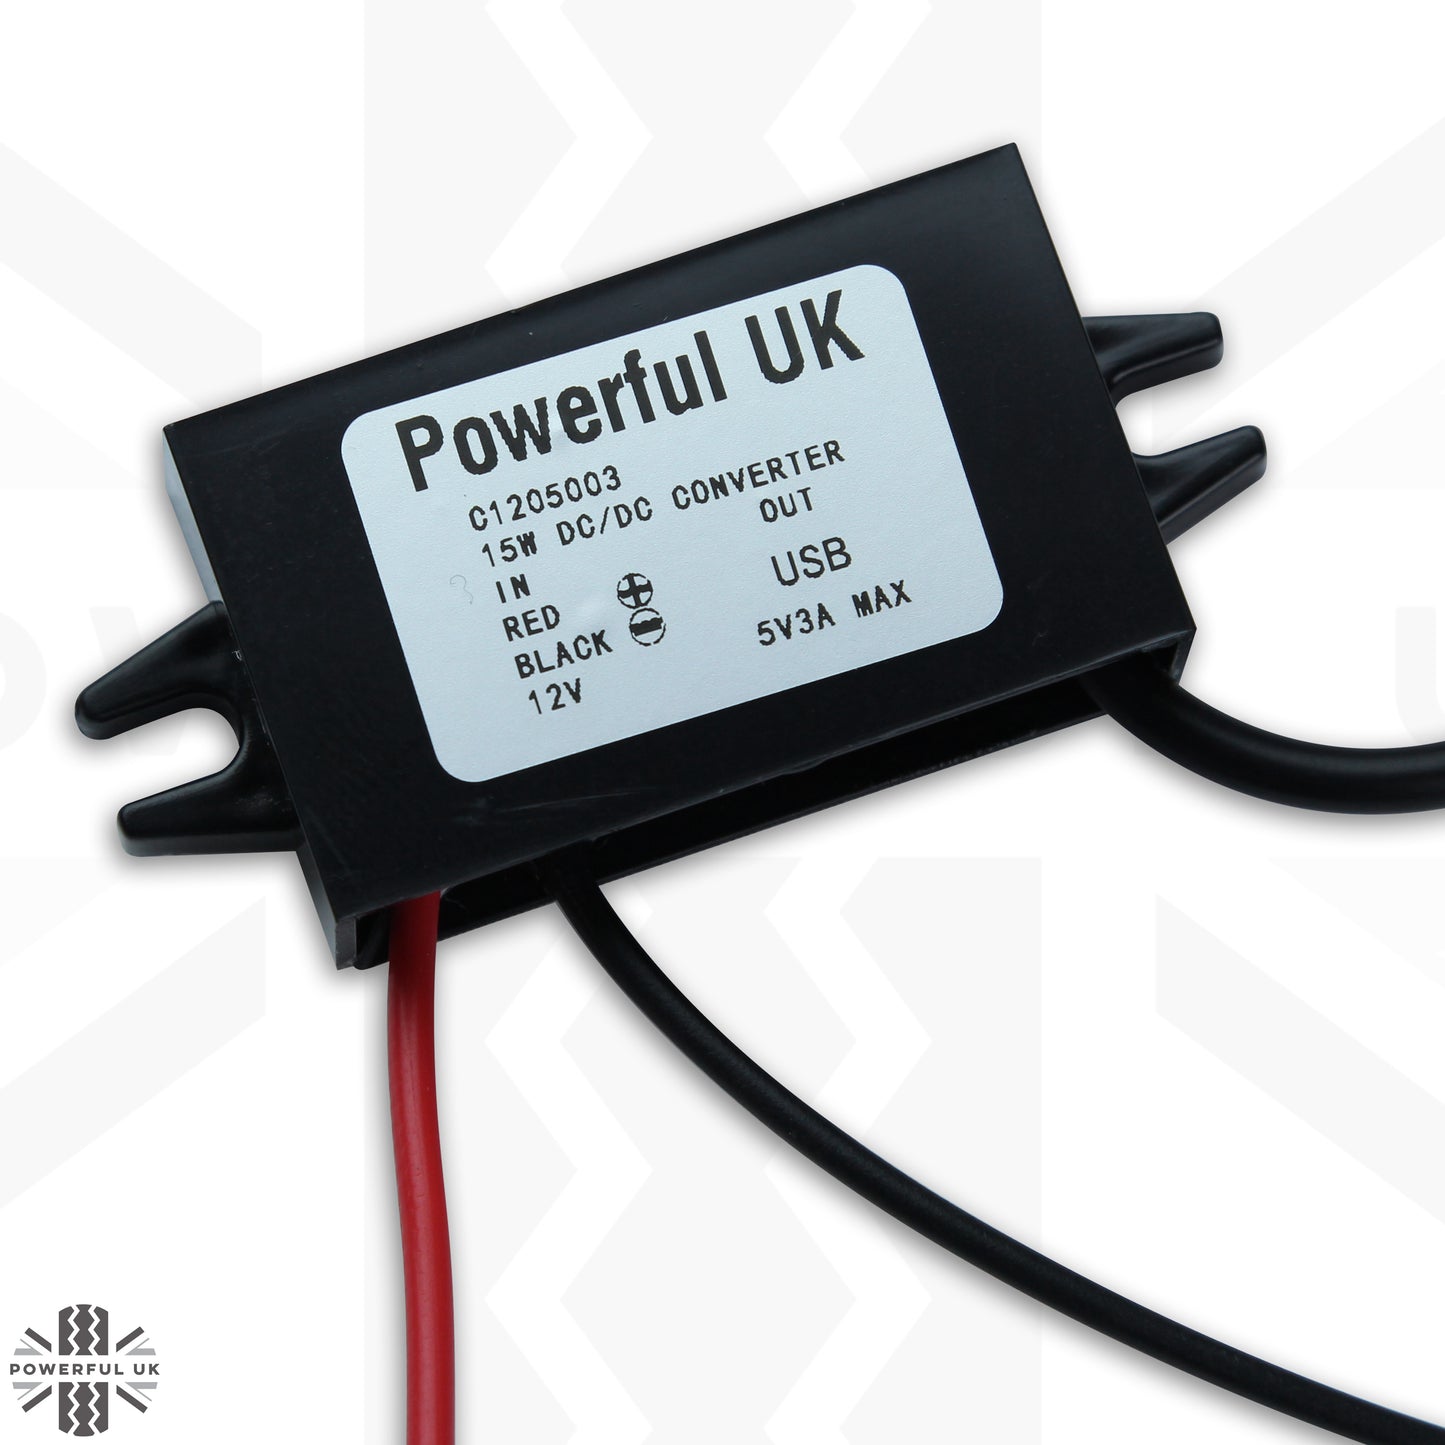 12v to 5v (3A) USB-C Plug Adapter Kit